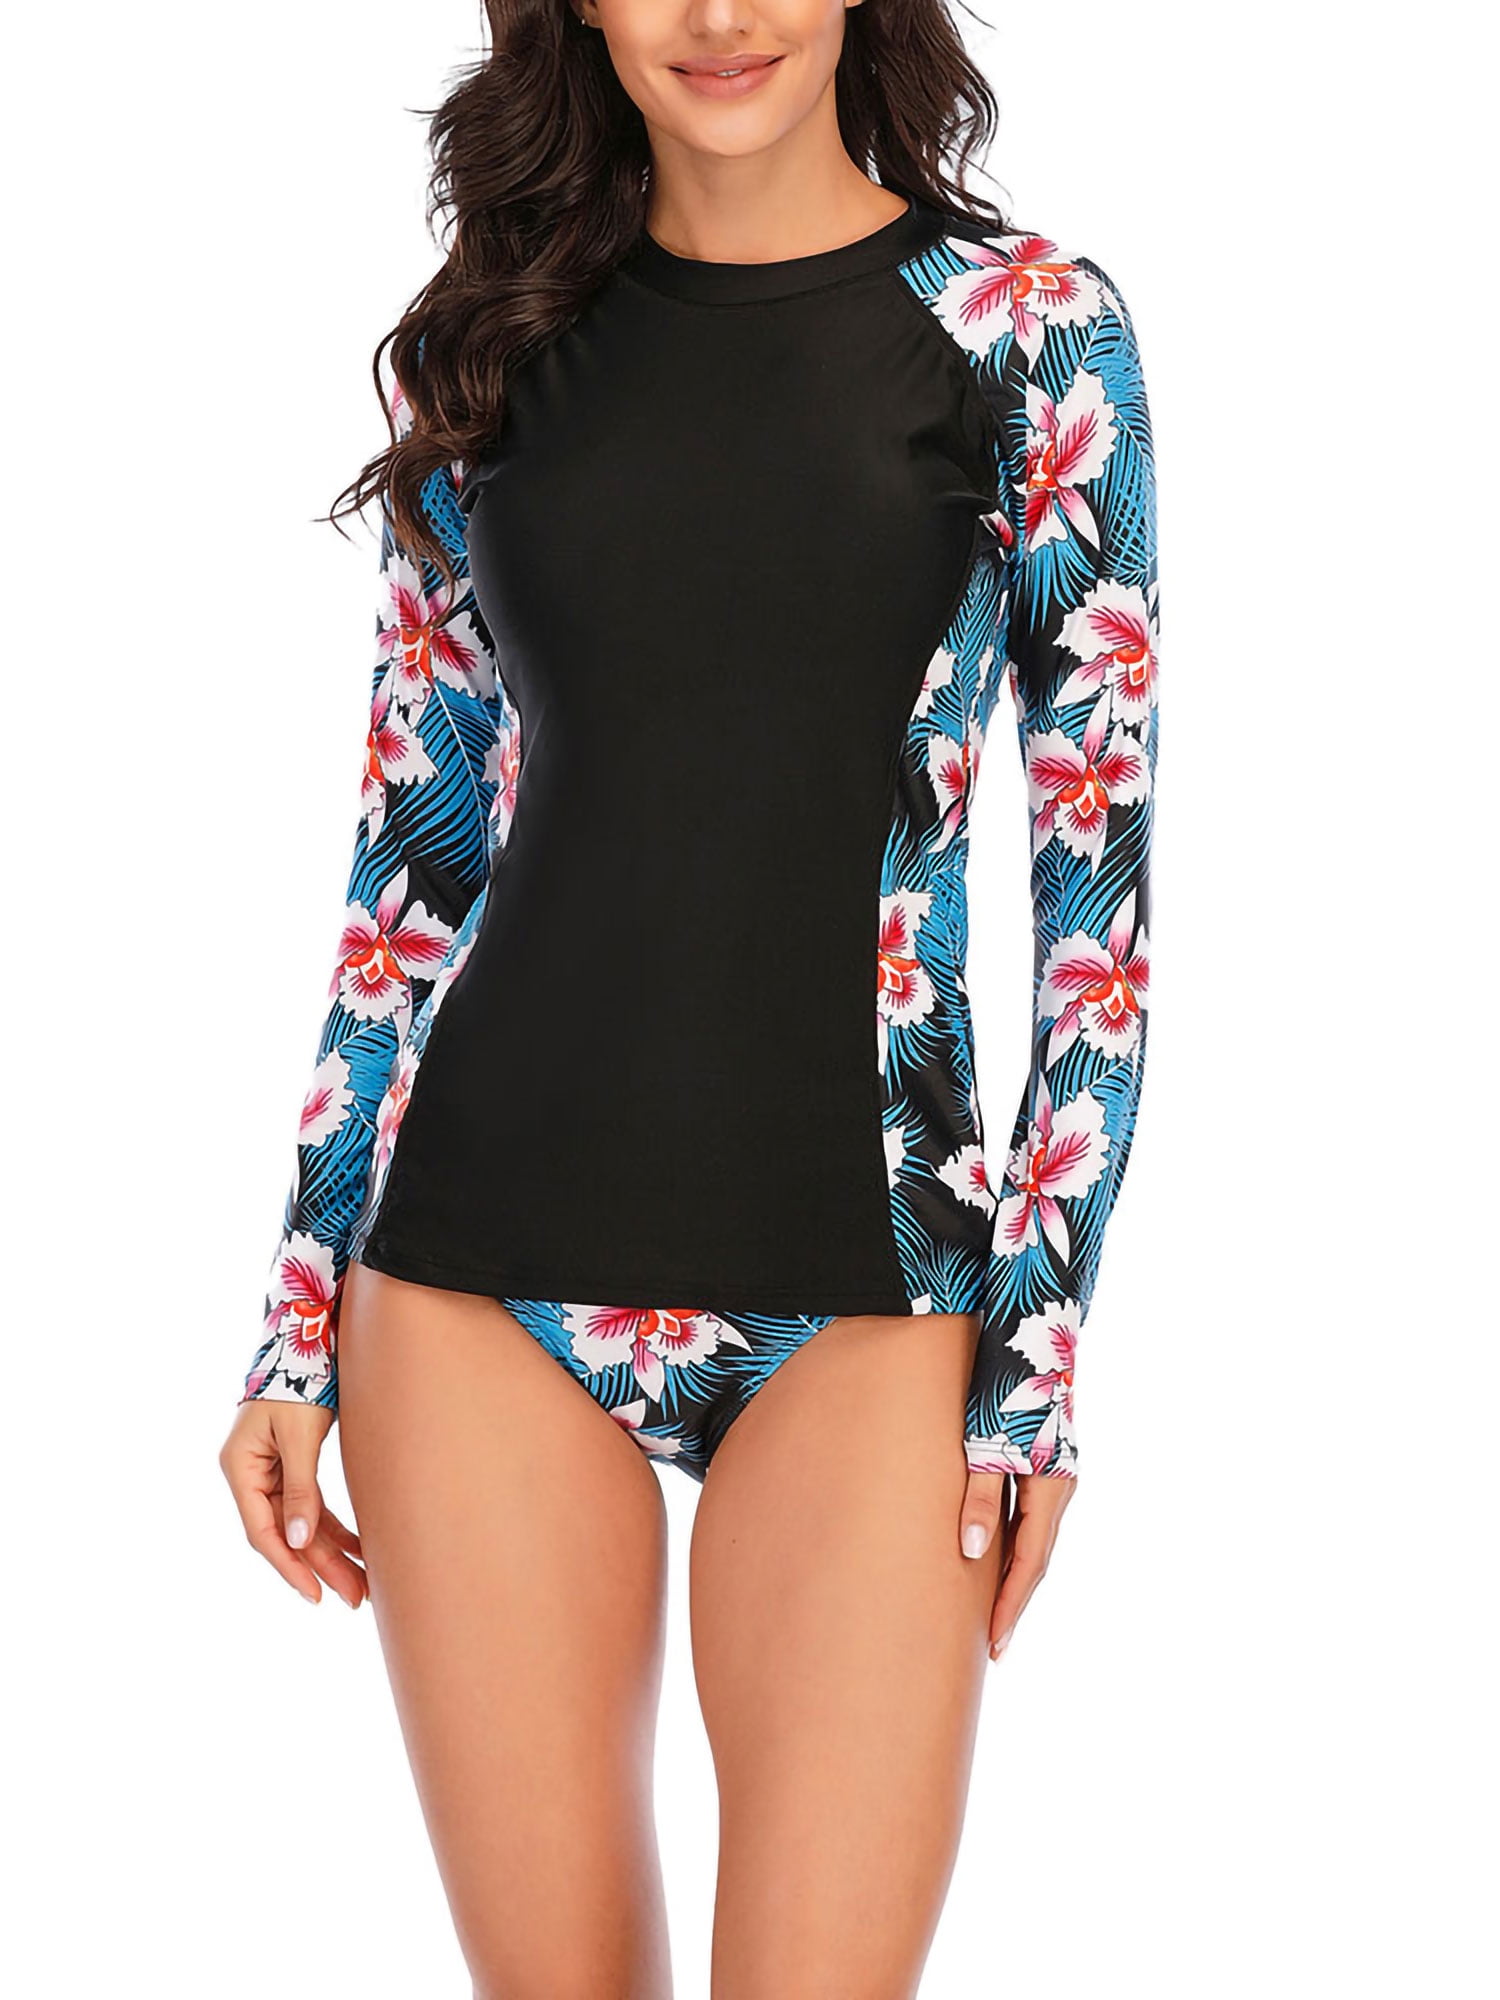 Zando Two Piece Swimsuit for Women Long Sleeve Womens Swimsuits Athletic Tankini Set Bathing Suit Rashguard Shirt 